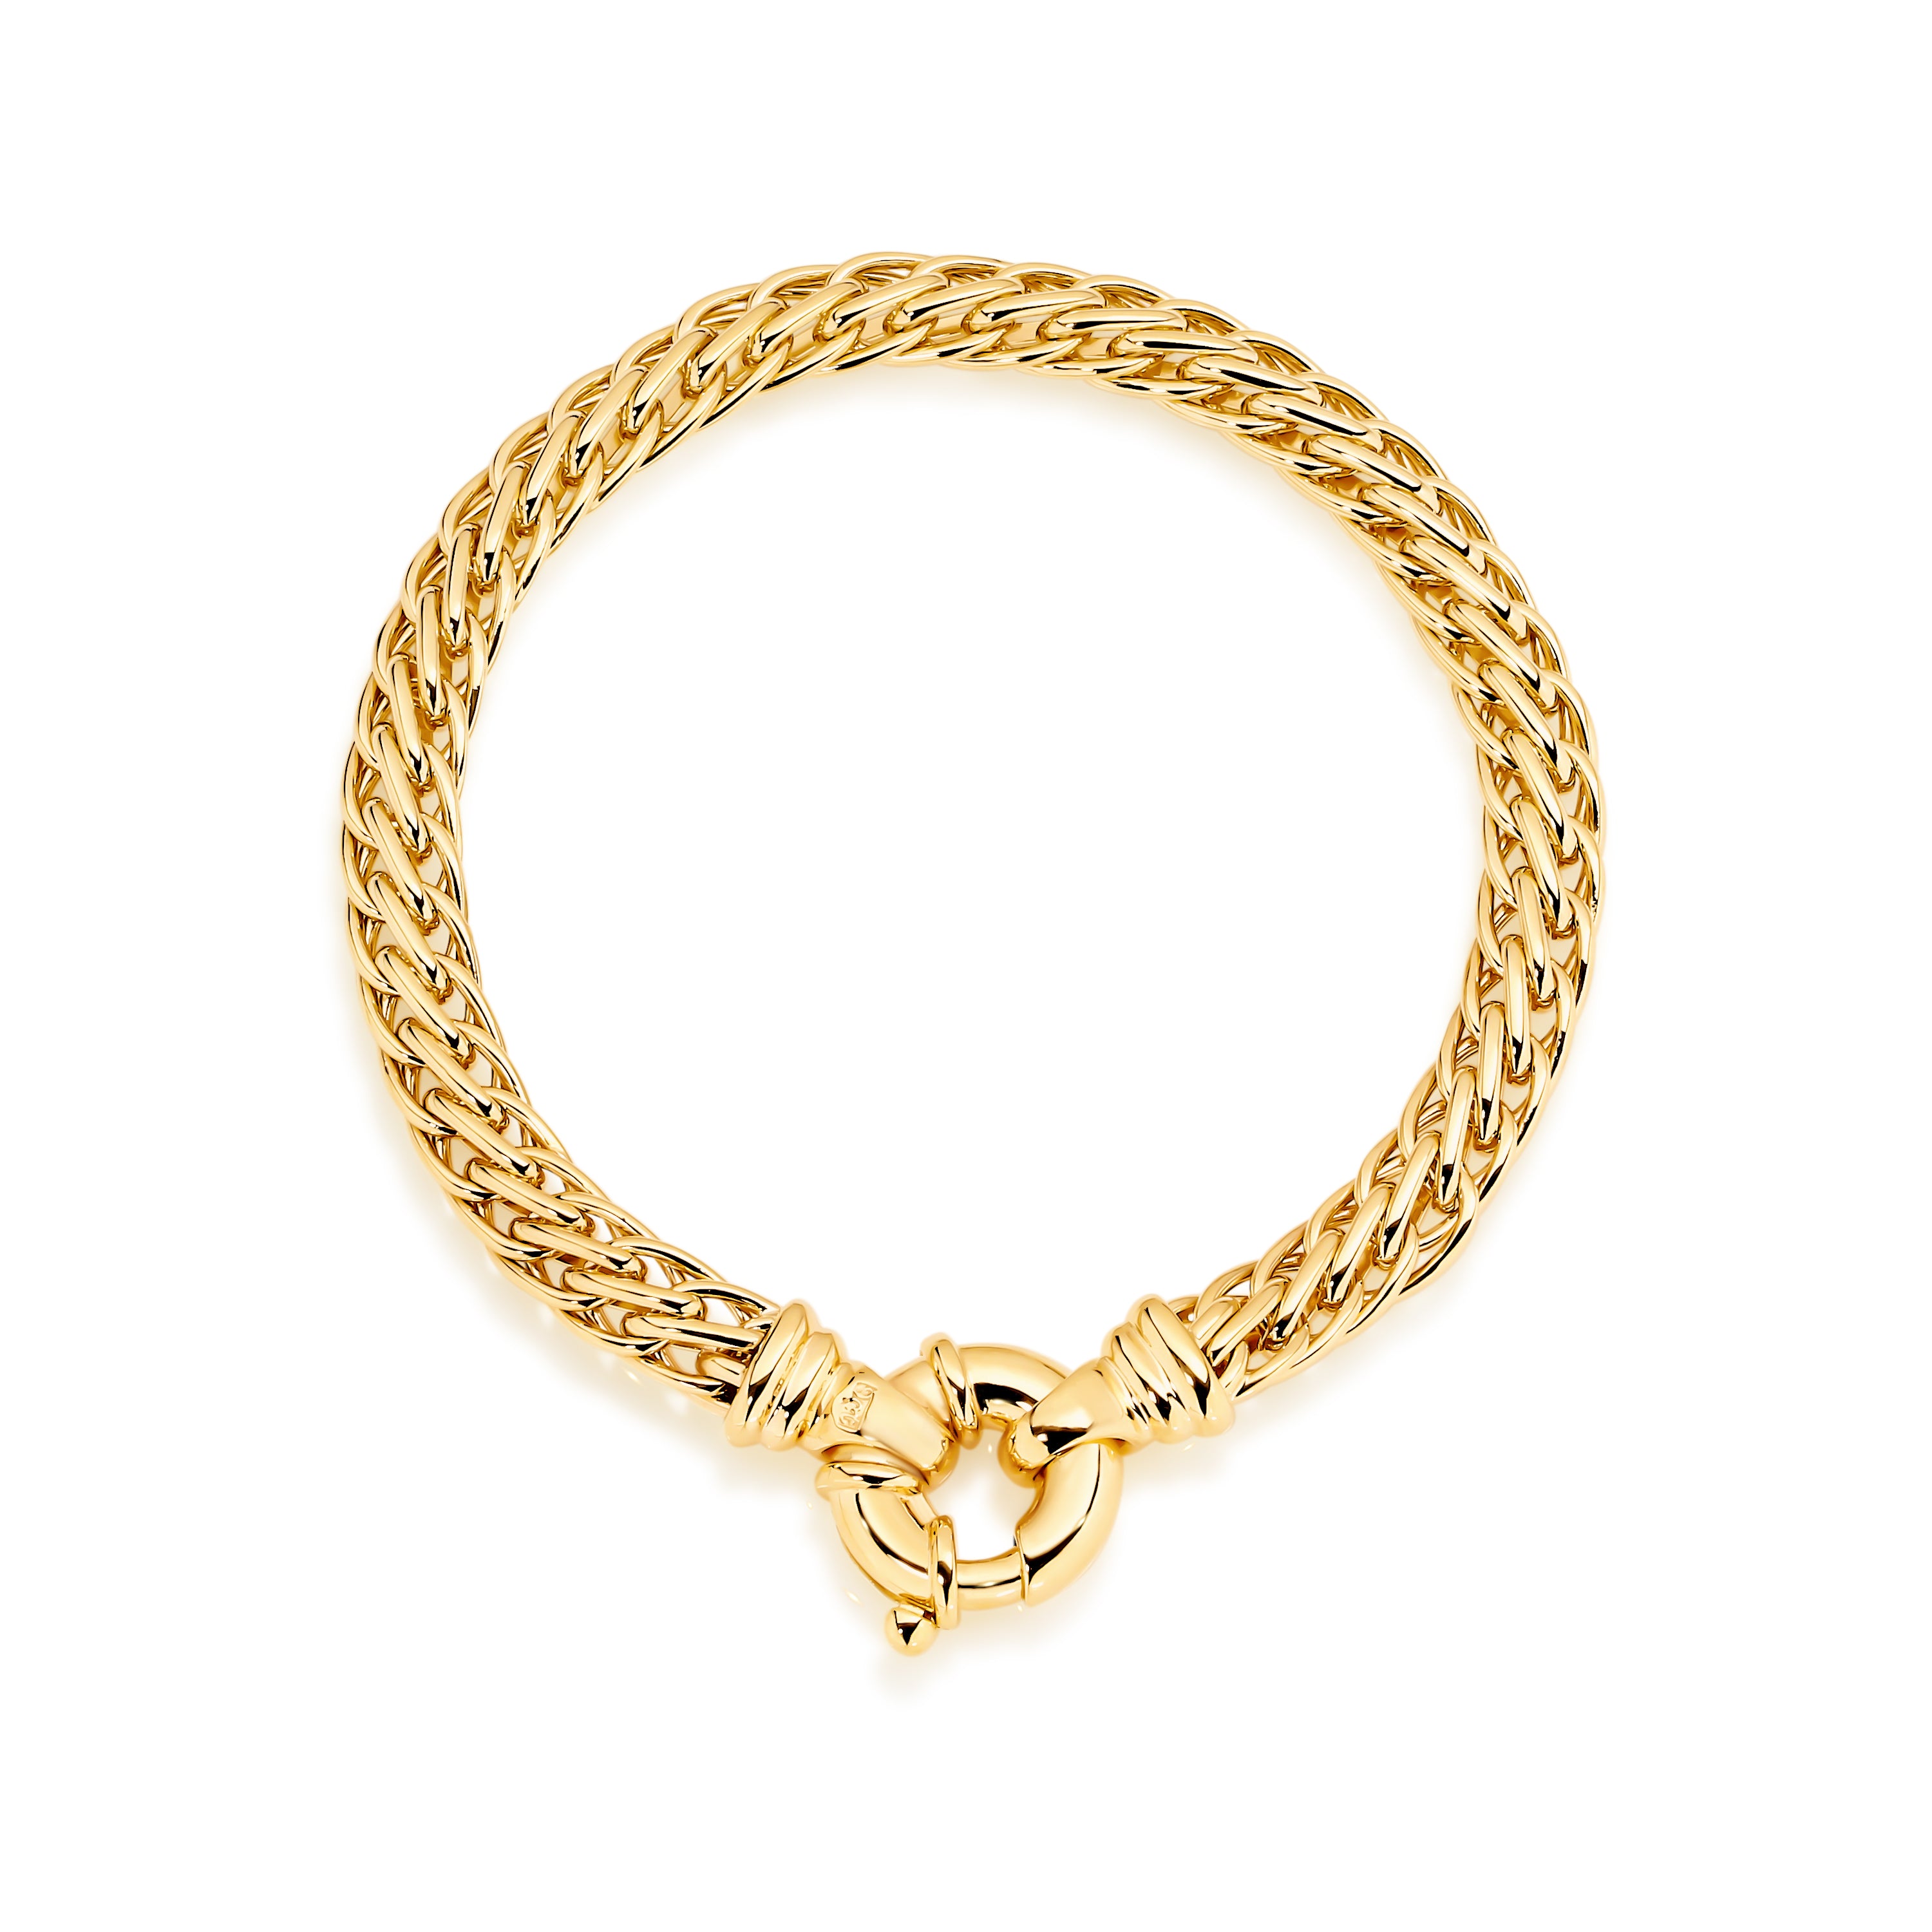 9ct solid gold interlock bracelet